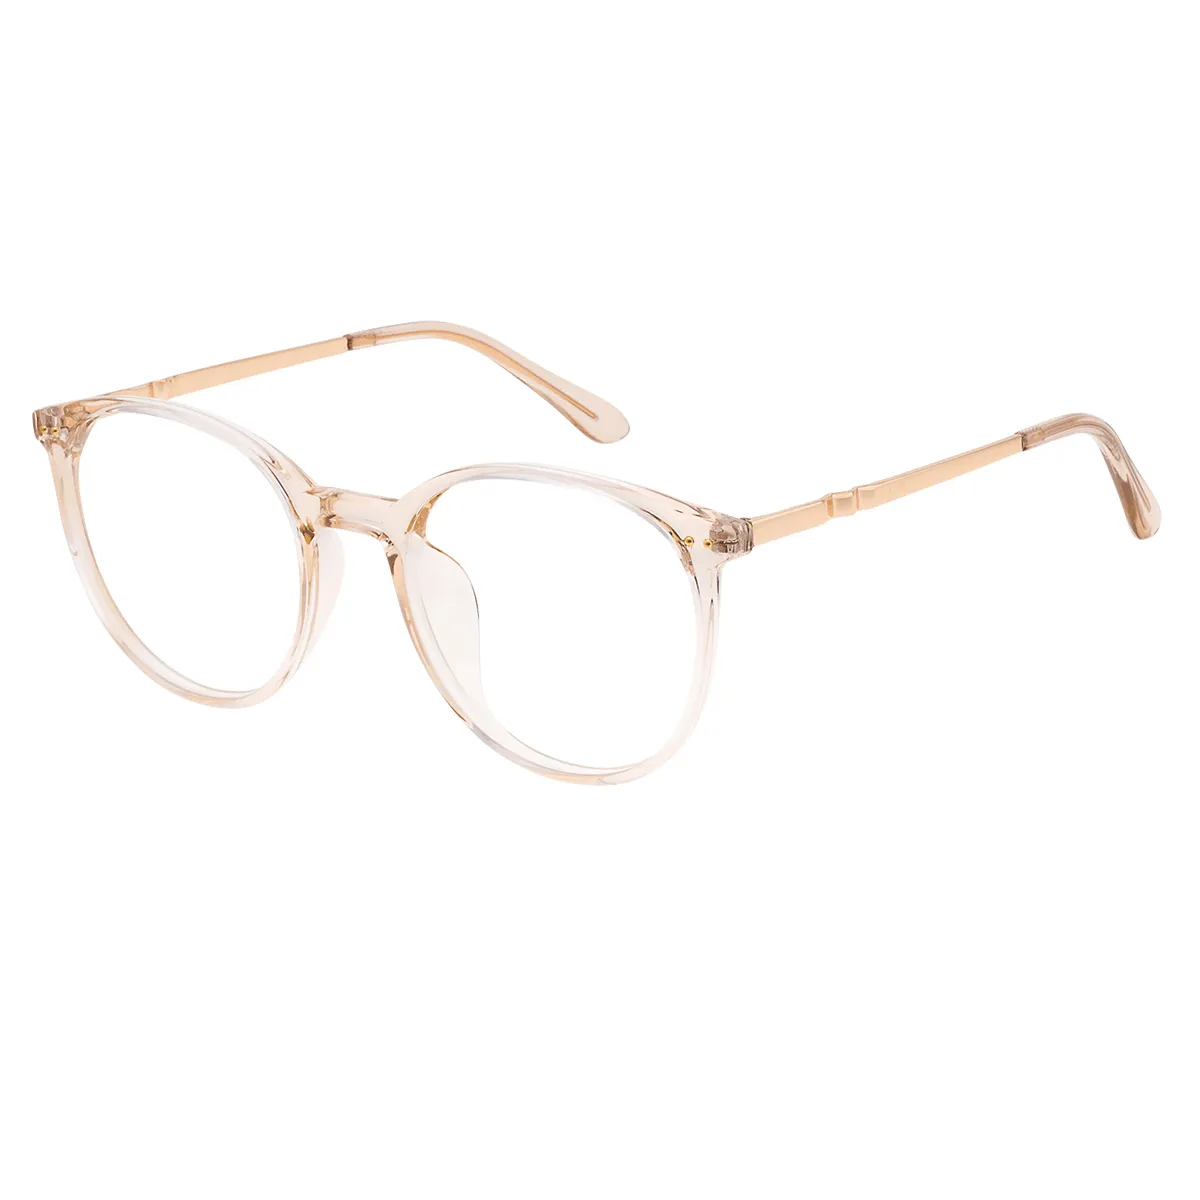 Houser - Round Brown Glasses for Women - EFE